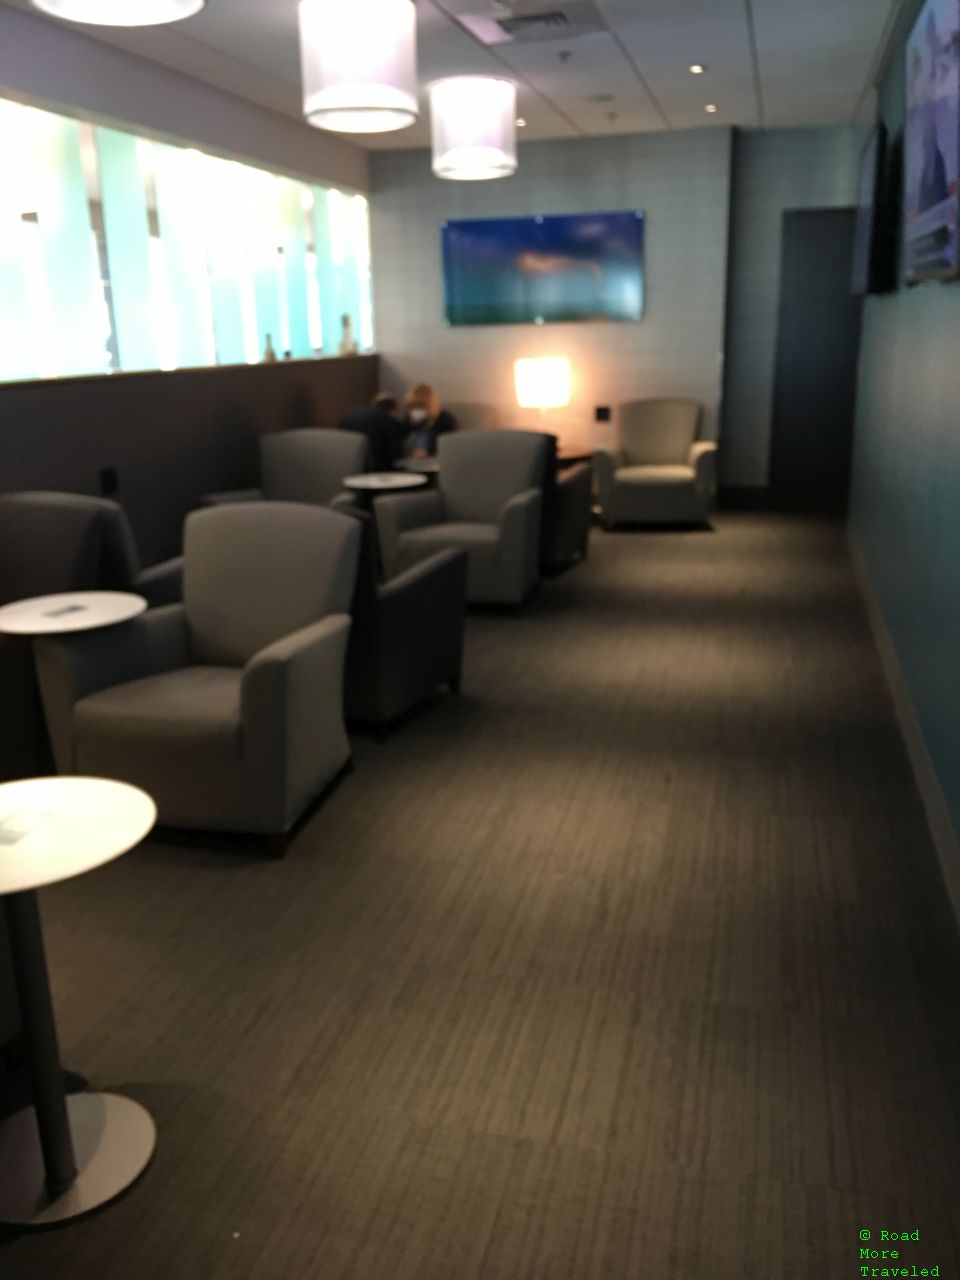 Main Club seating area (CHS)